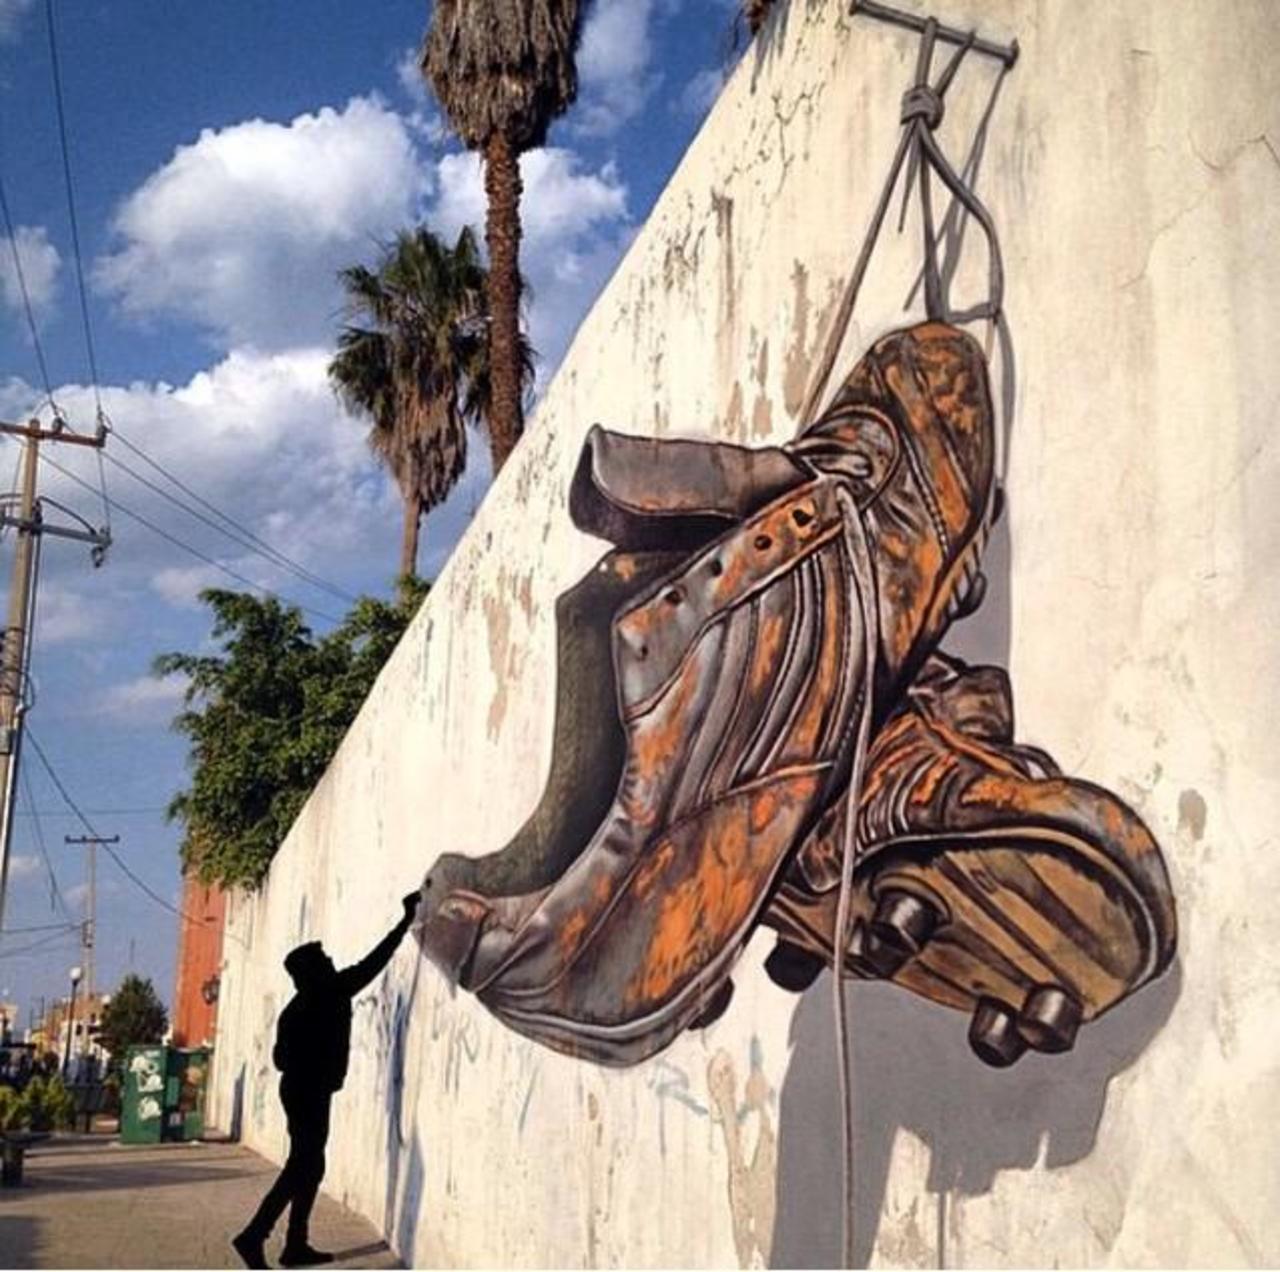 RT @Dolcepiemonte: “@GoogleStreetArt: Awesome anamorphic 3D #StreetArt by Juandres Vera #art #graffiti #mural  http://t.co/9BNiKVlmDx”